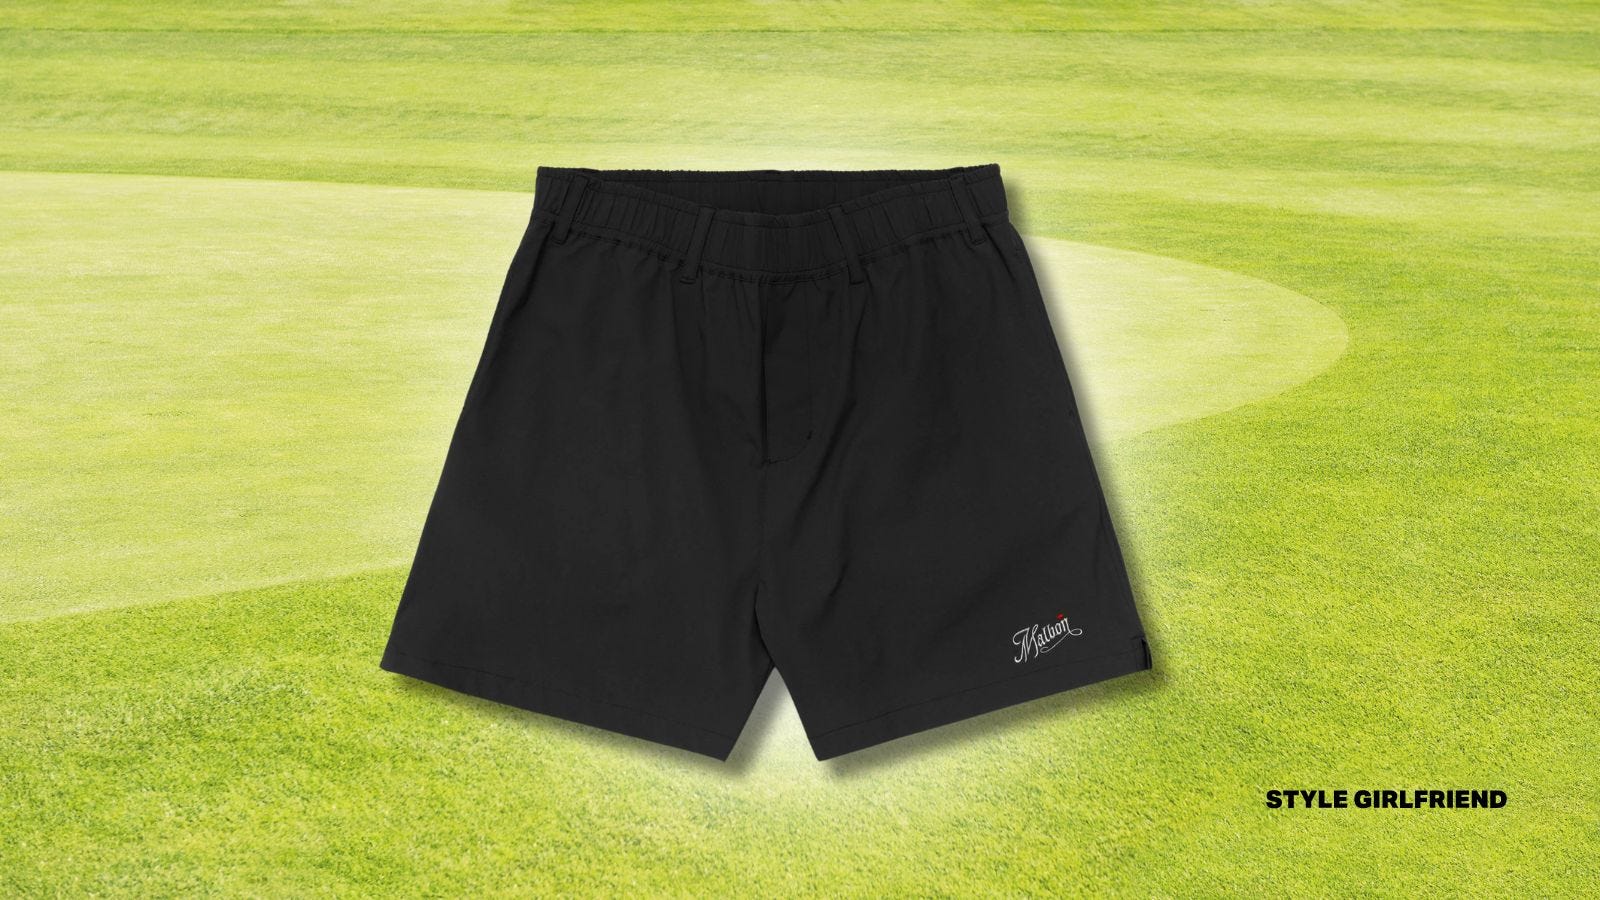 black Malbon golf shorts set against a golf green background